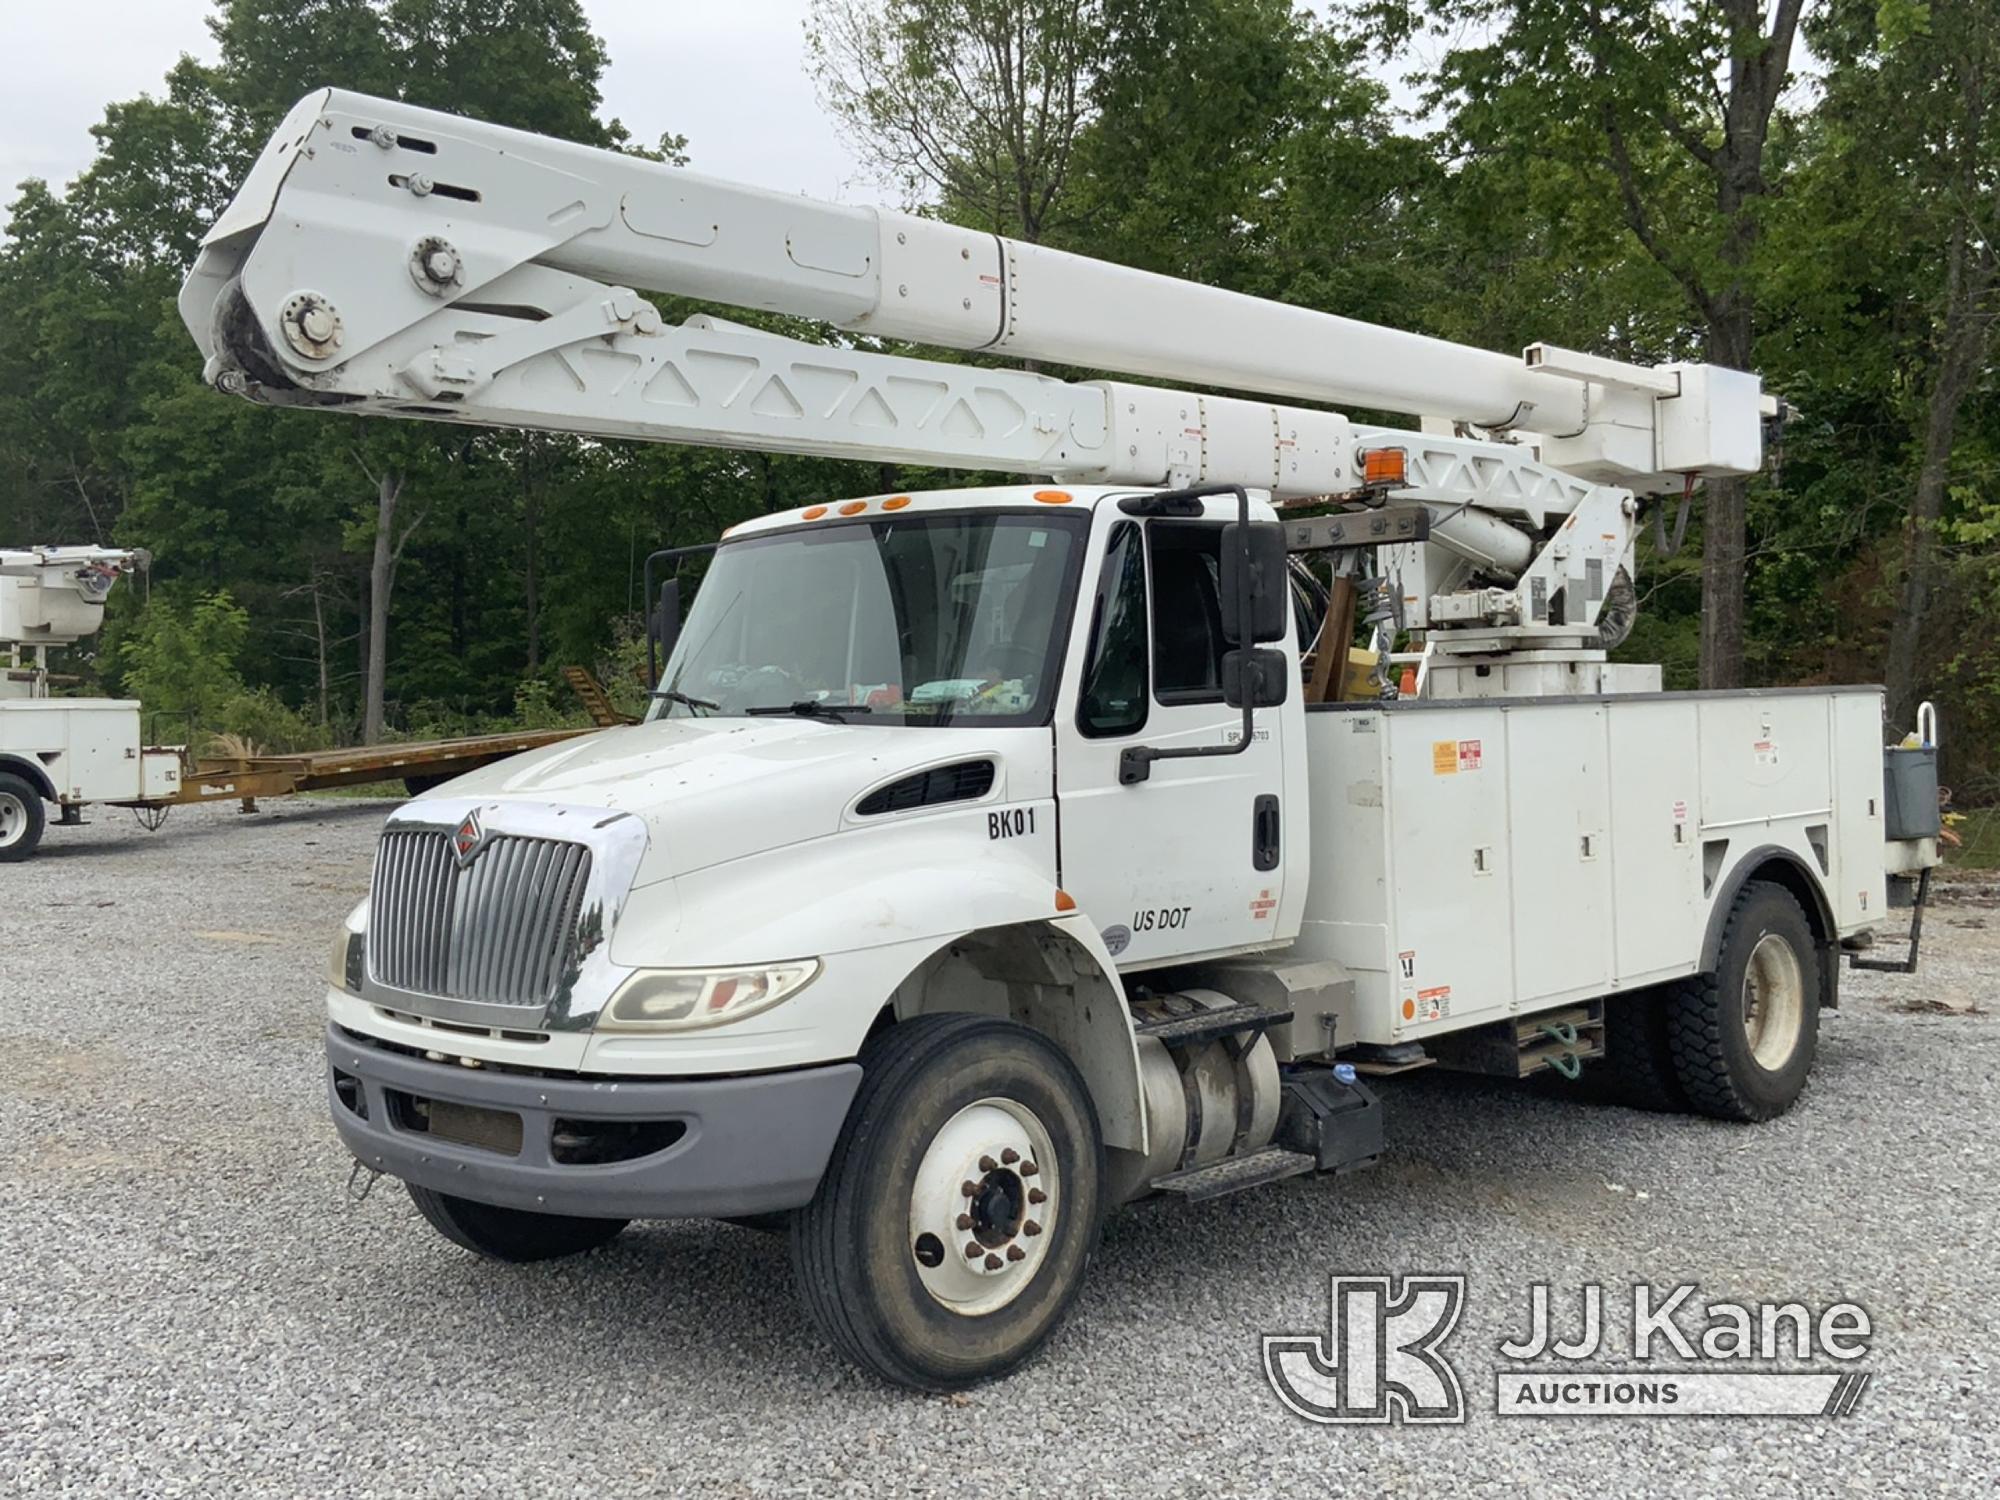 (New Tazewell, TN) Terex/Telelect Hi-Ranger HRX-55, Material Handling Bucket Truck rear mounted on 2